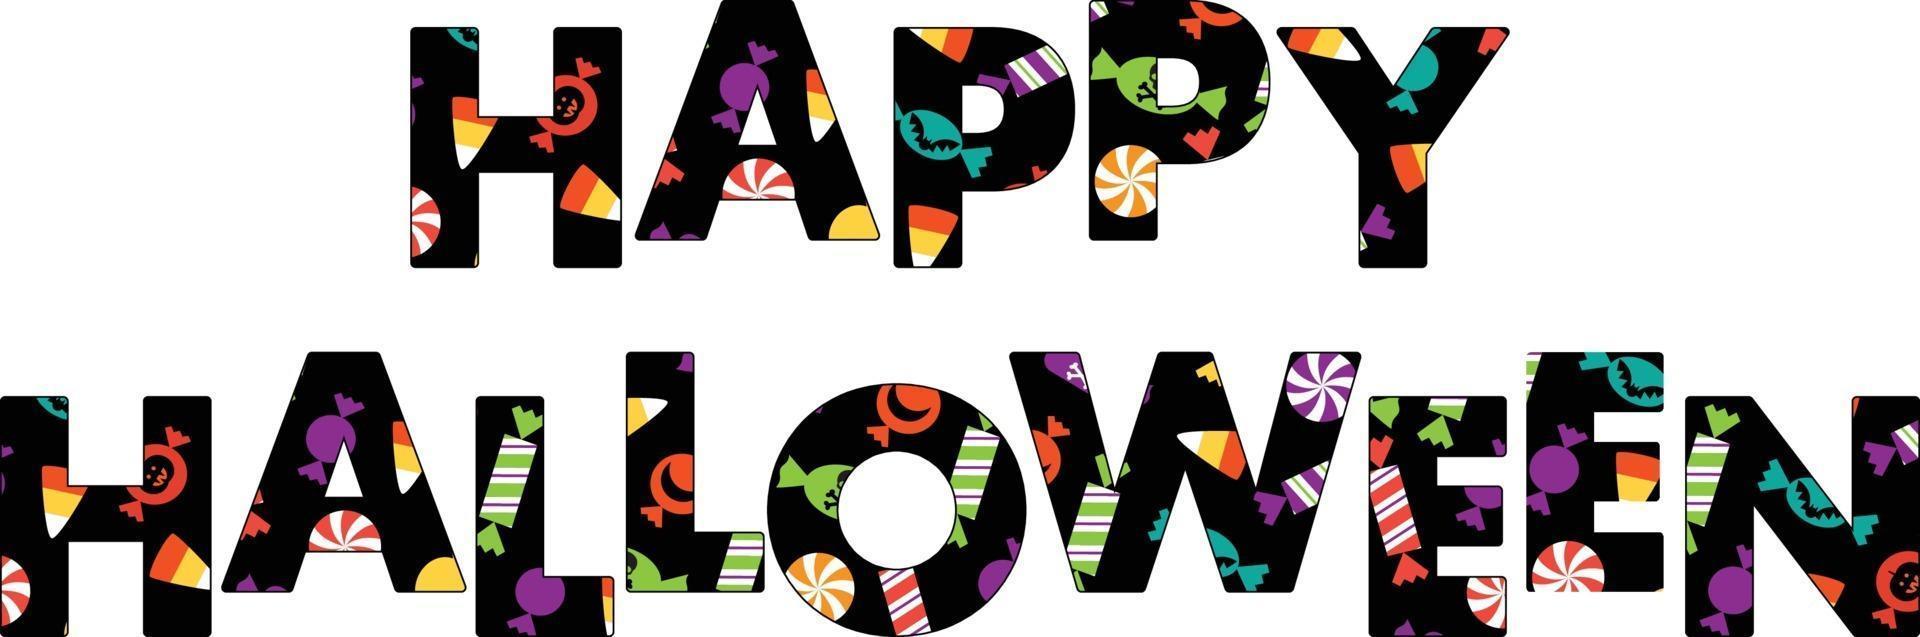 Halloween candy pattern vector alphabet